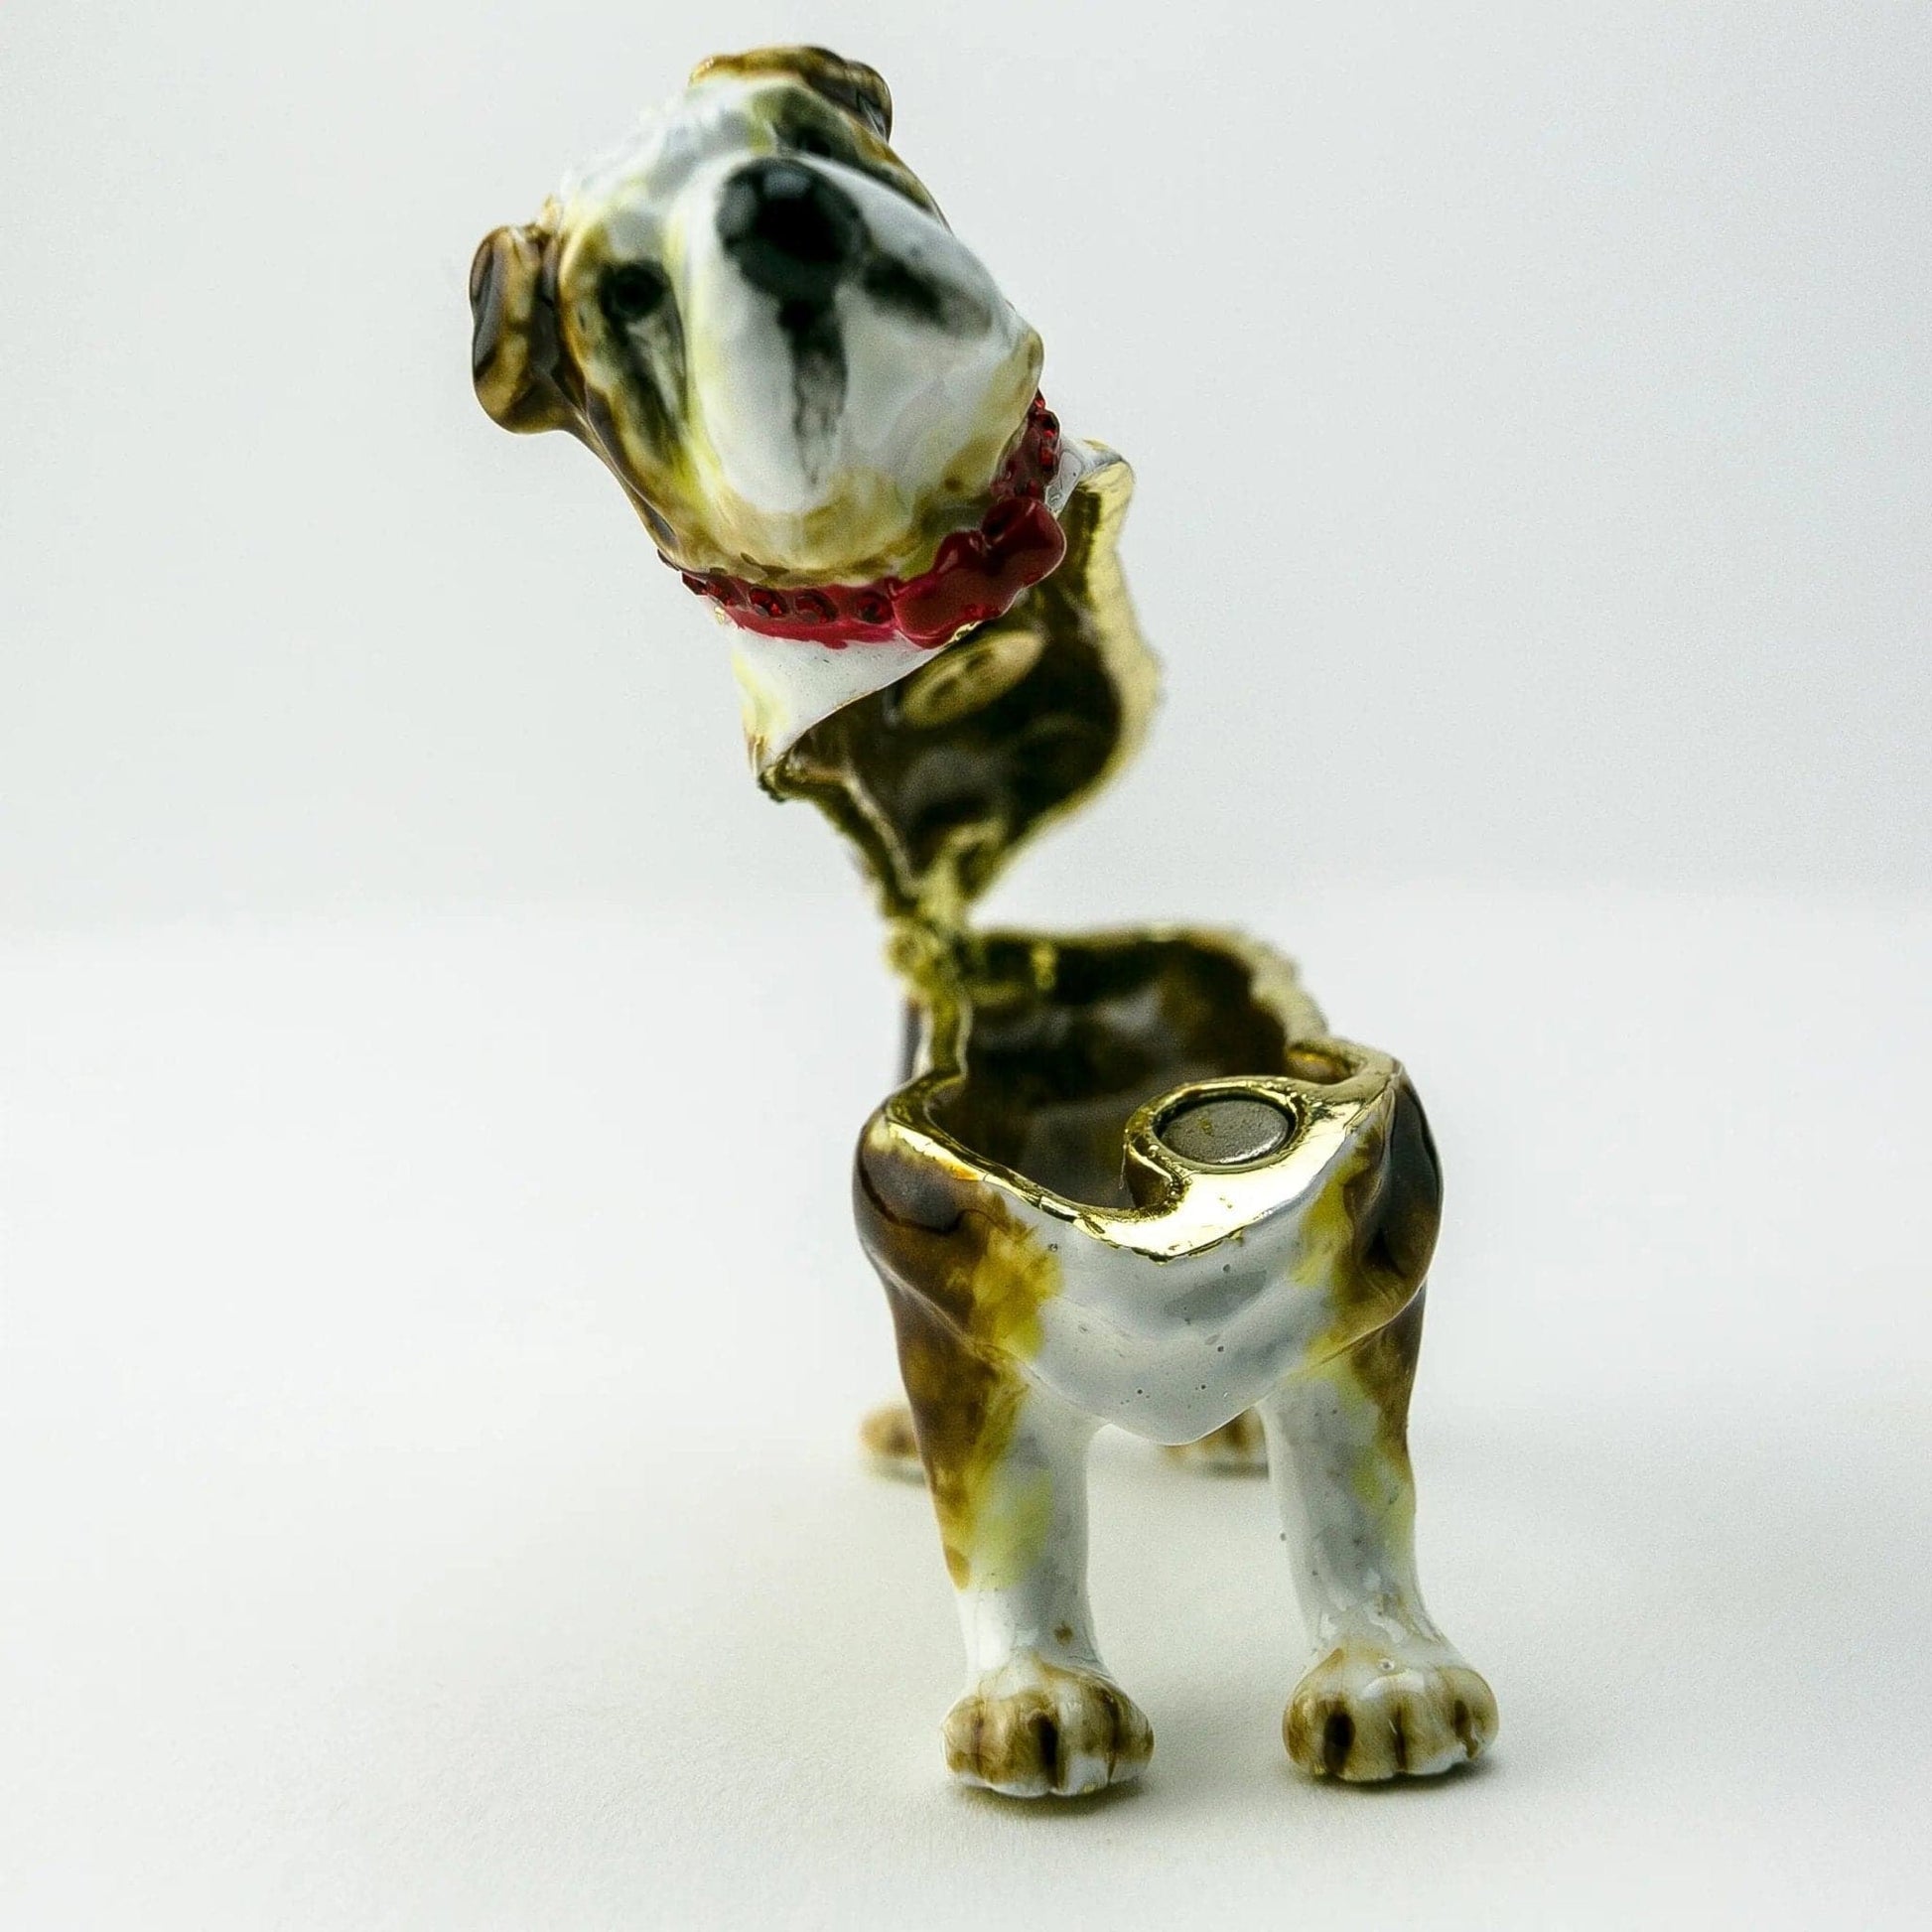 French Bulldog Dog | Treasures of my HeART